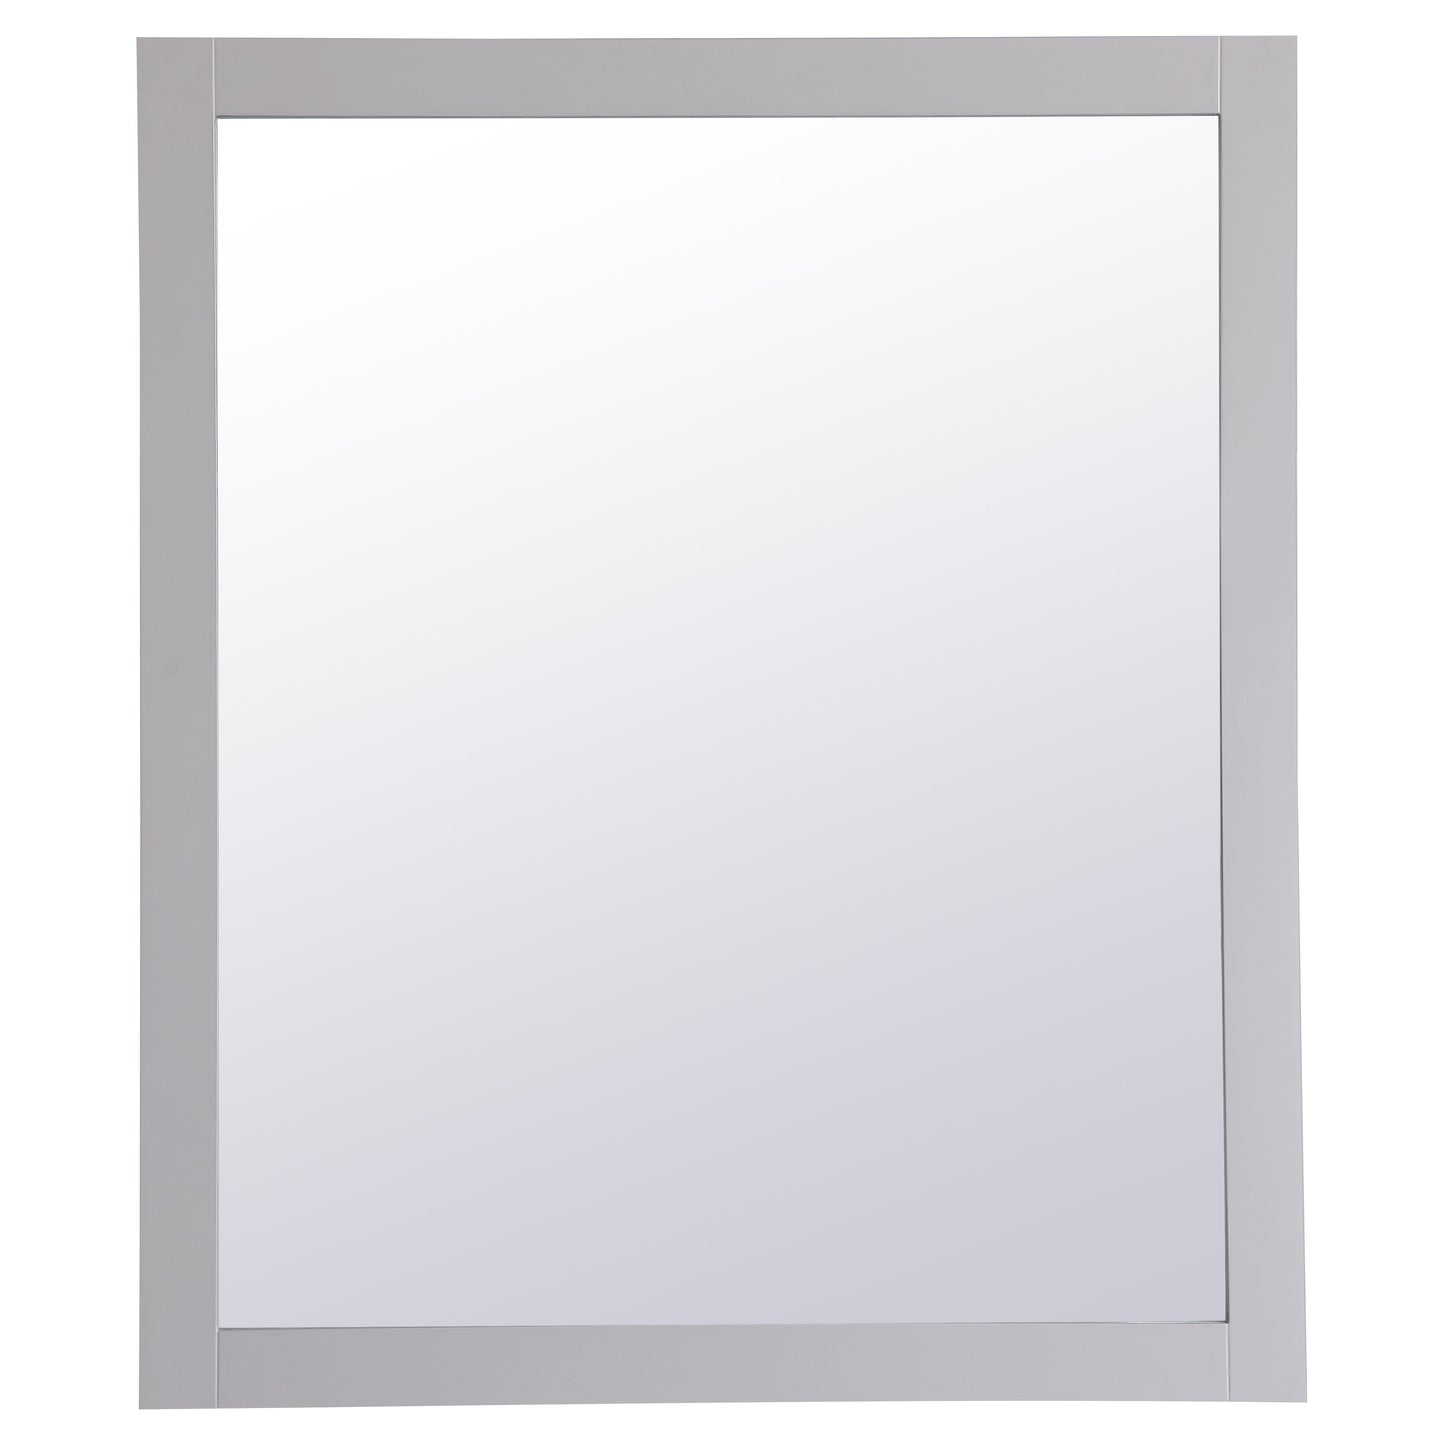 VM24236GR Aqua 42" x 36" Framed Rectangular Mirror in Grey